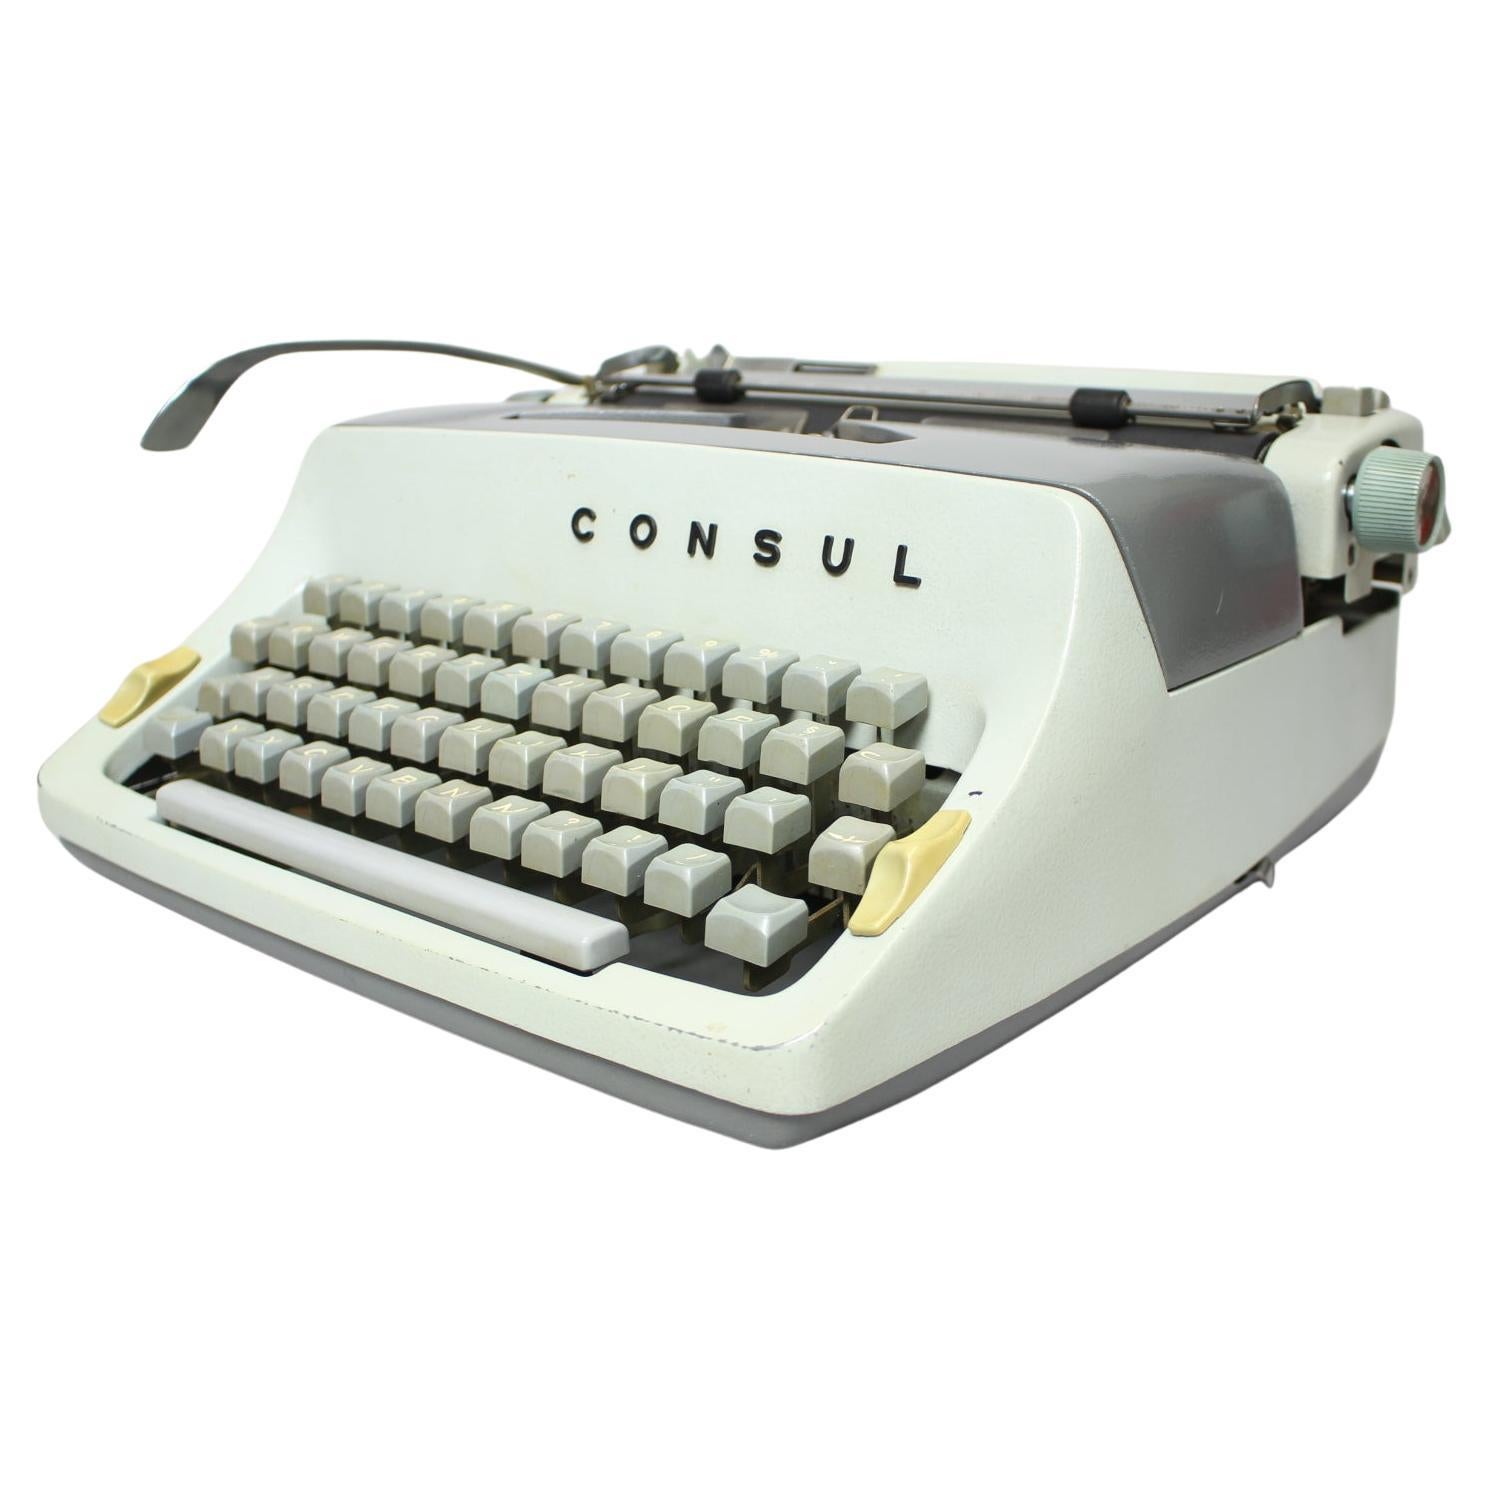 Restored Typewriter/ Consul, Czechoslovakia, 1962s For Sale